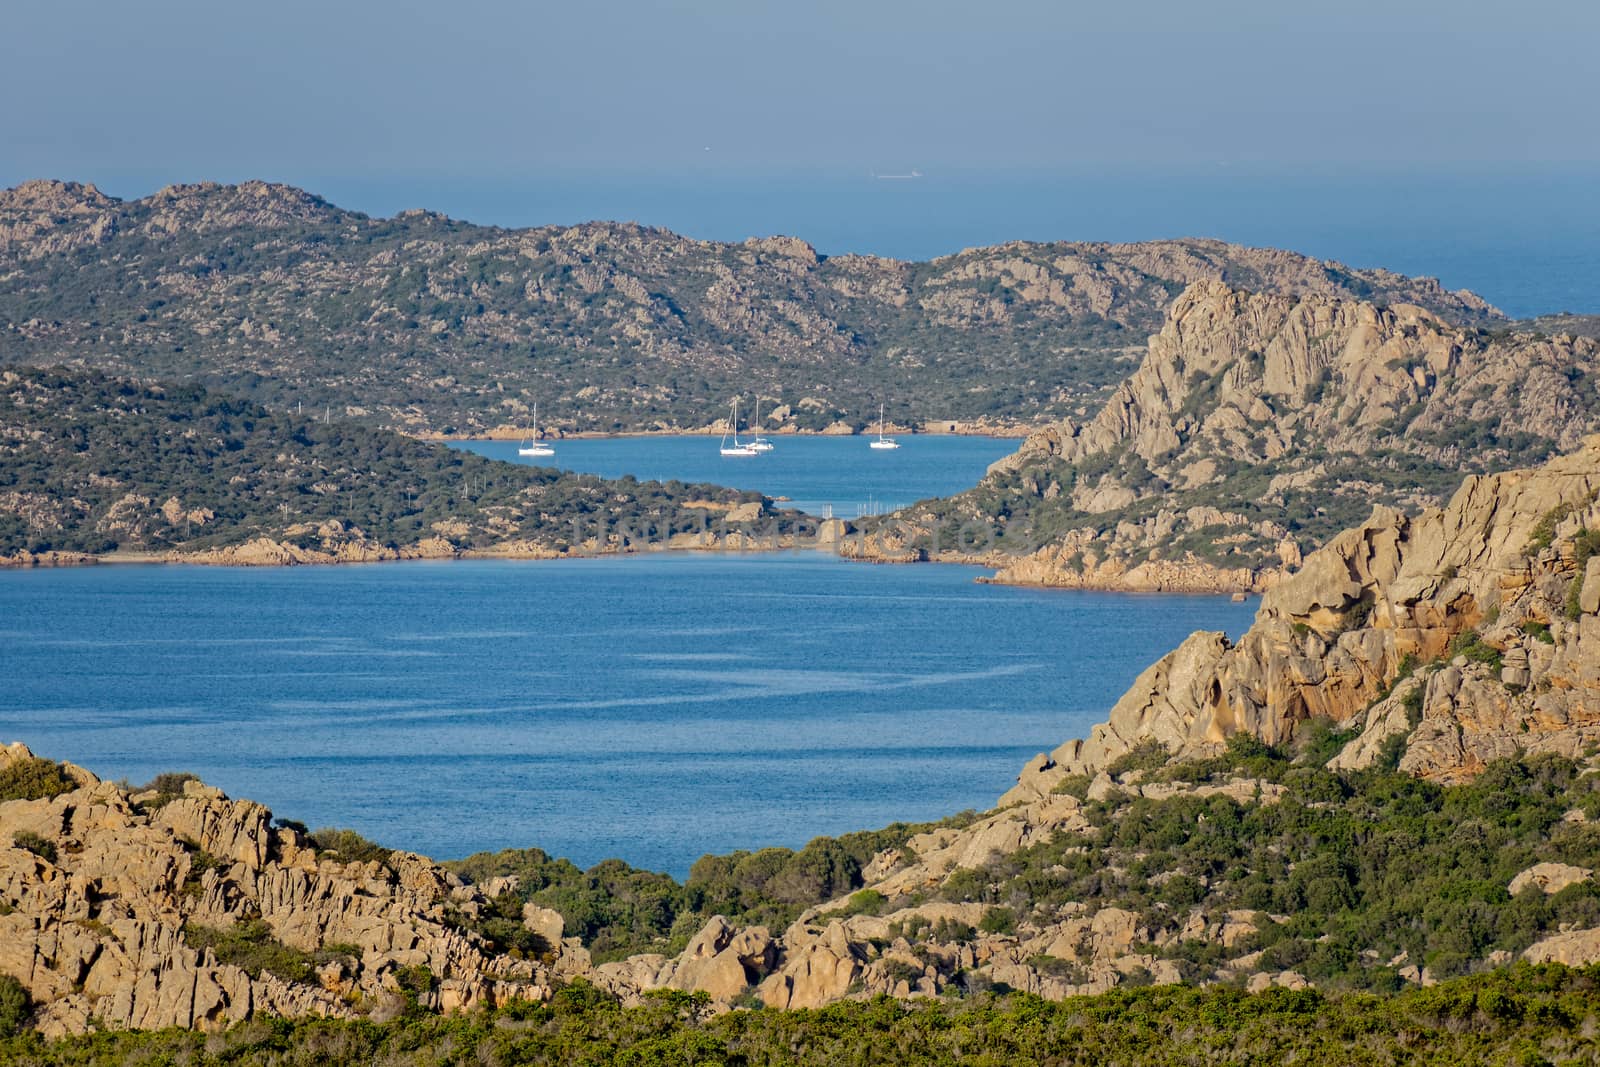 View form Palau in Sardinia